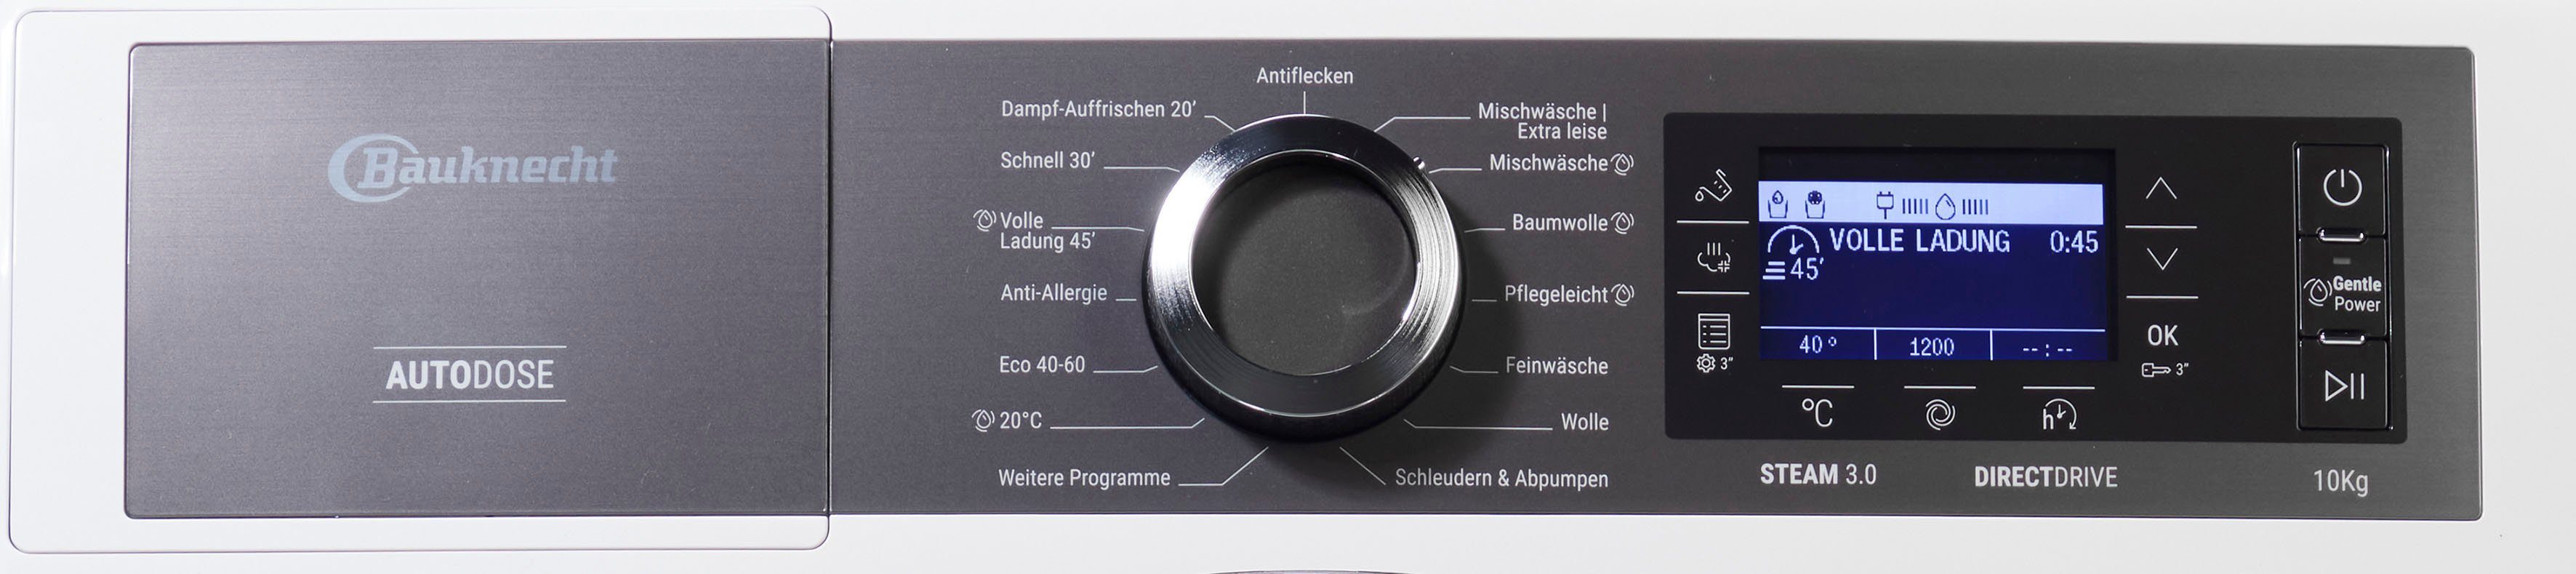 Waschmaschine BAUKNECHT AutoDose kg, DE, W046WB B8 U/min, 1400 10